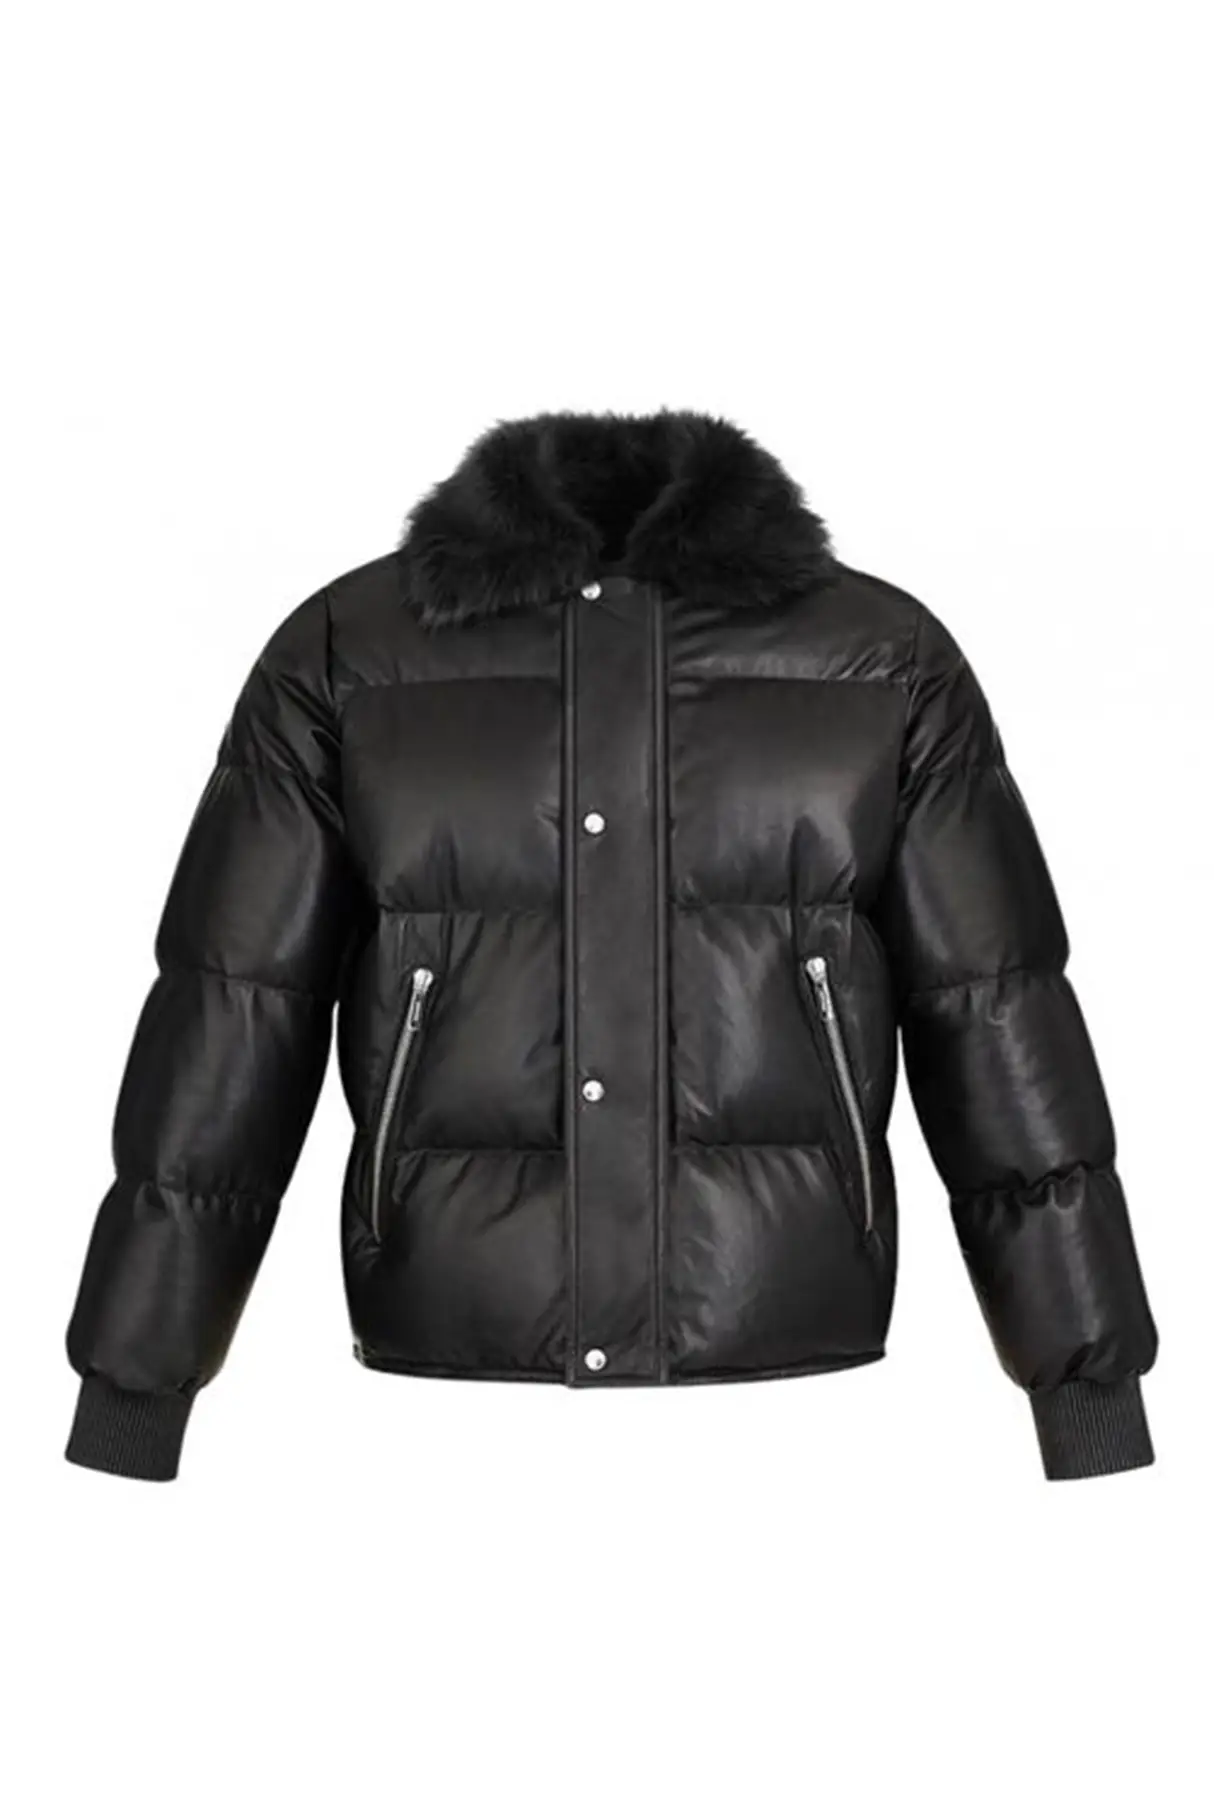 Dior-leather-black-mens-puffer-jacket